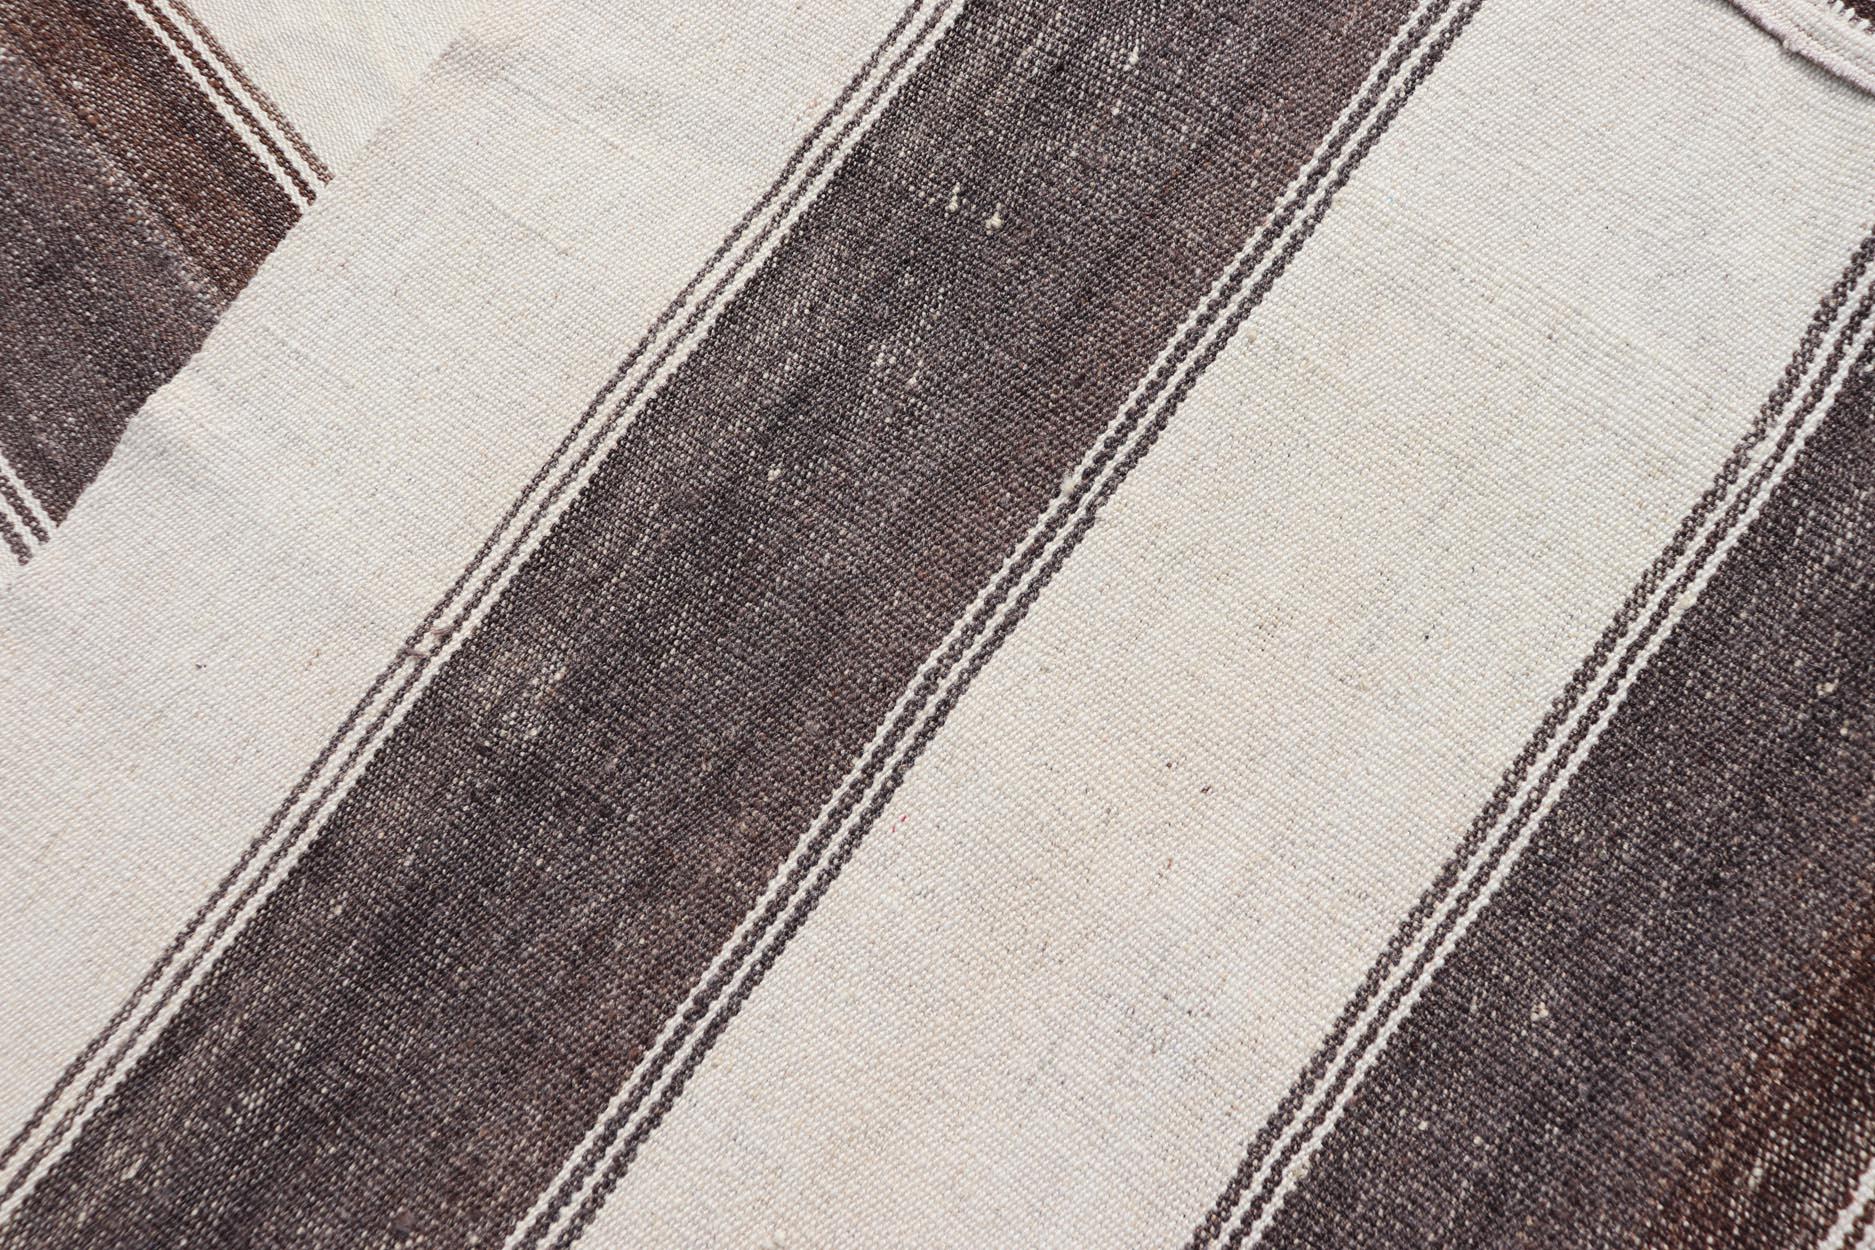 Striped Turkish Vintage Kilim Flat-Weave Rug in Brown, Mocha, and Ivory For Sale 7